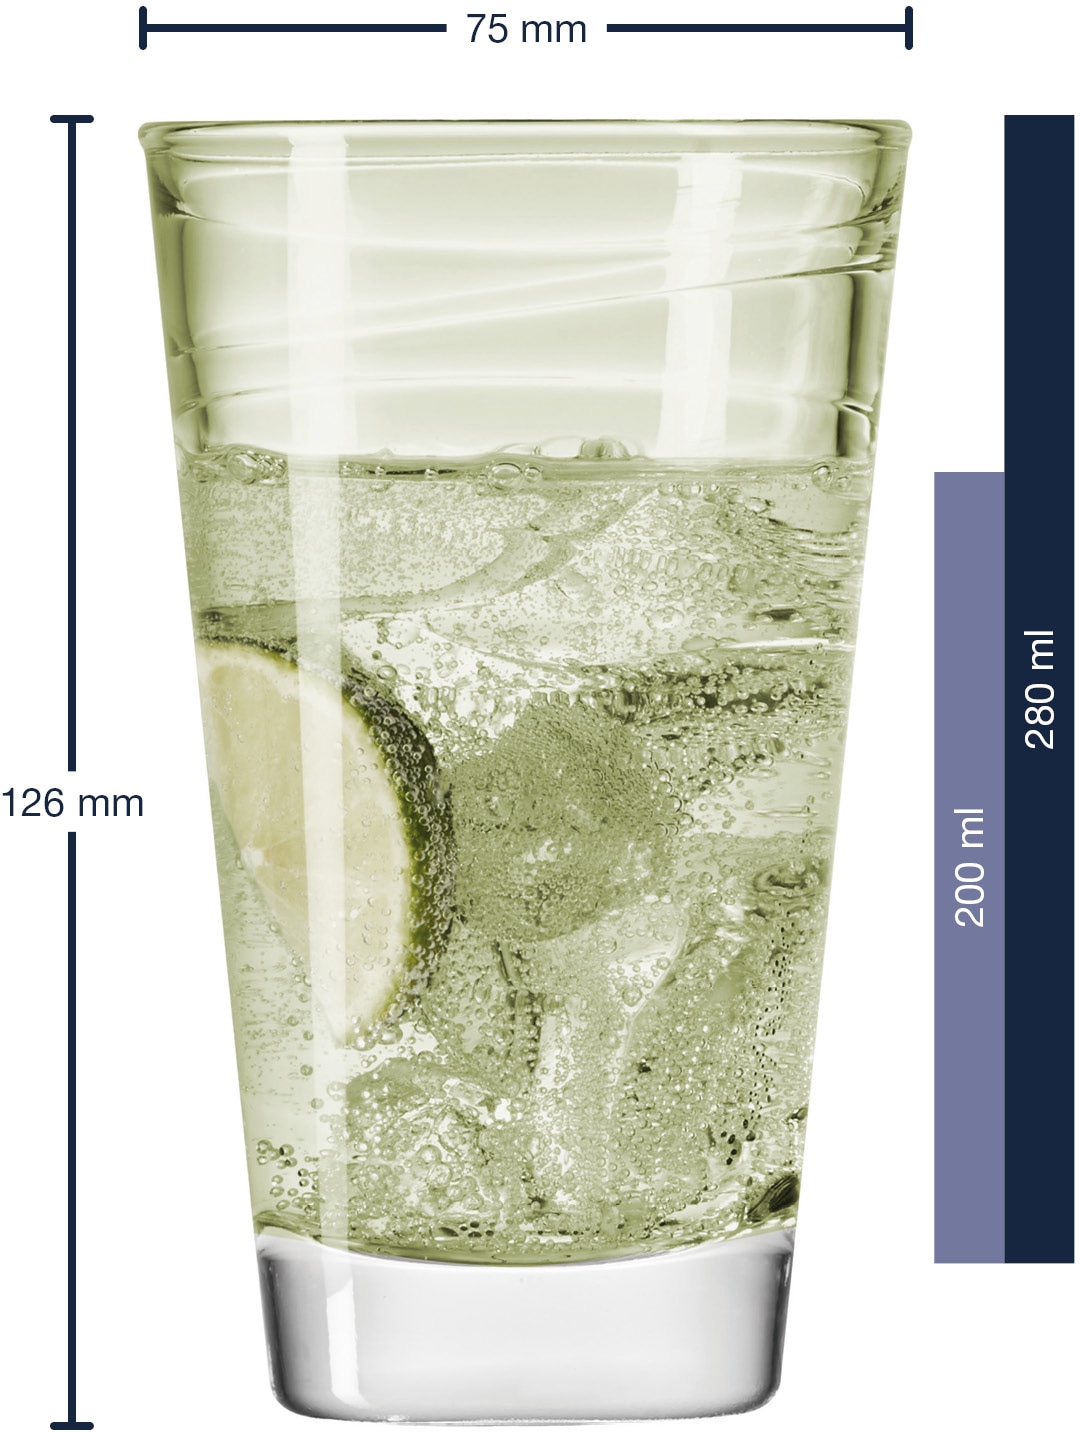 LEONARDO Longdrinkglas »Colori«, (Set, 6 tlg.), veredelte mit lichtechter Hydroglasur, 280 ml, 6-teilig